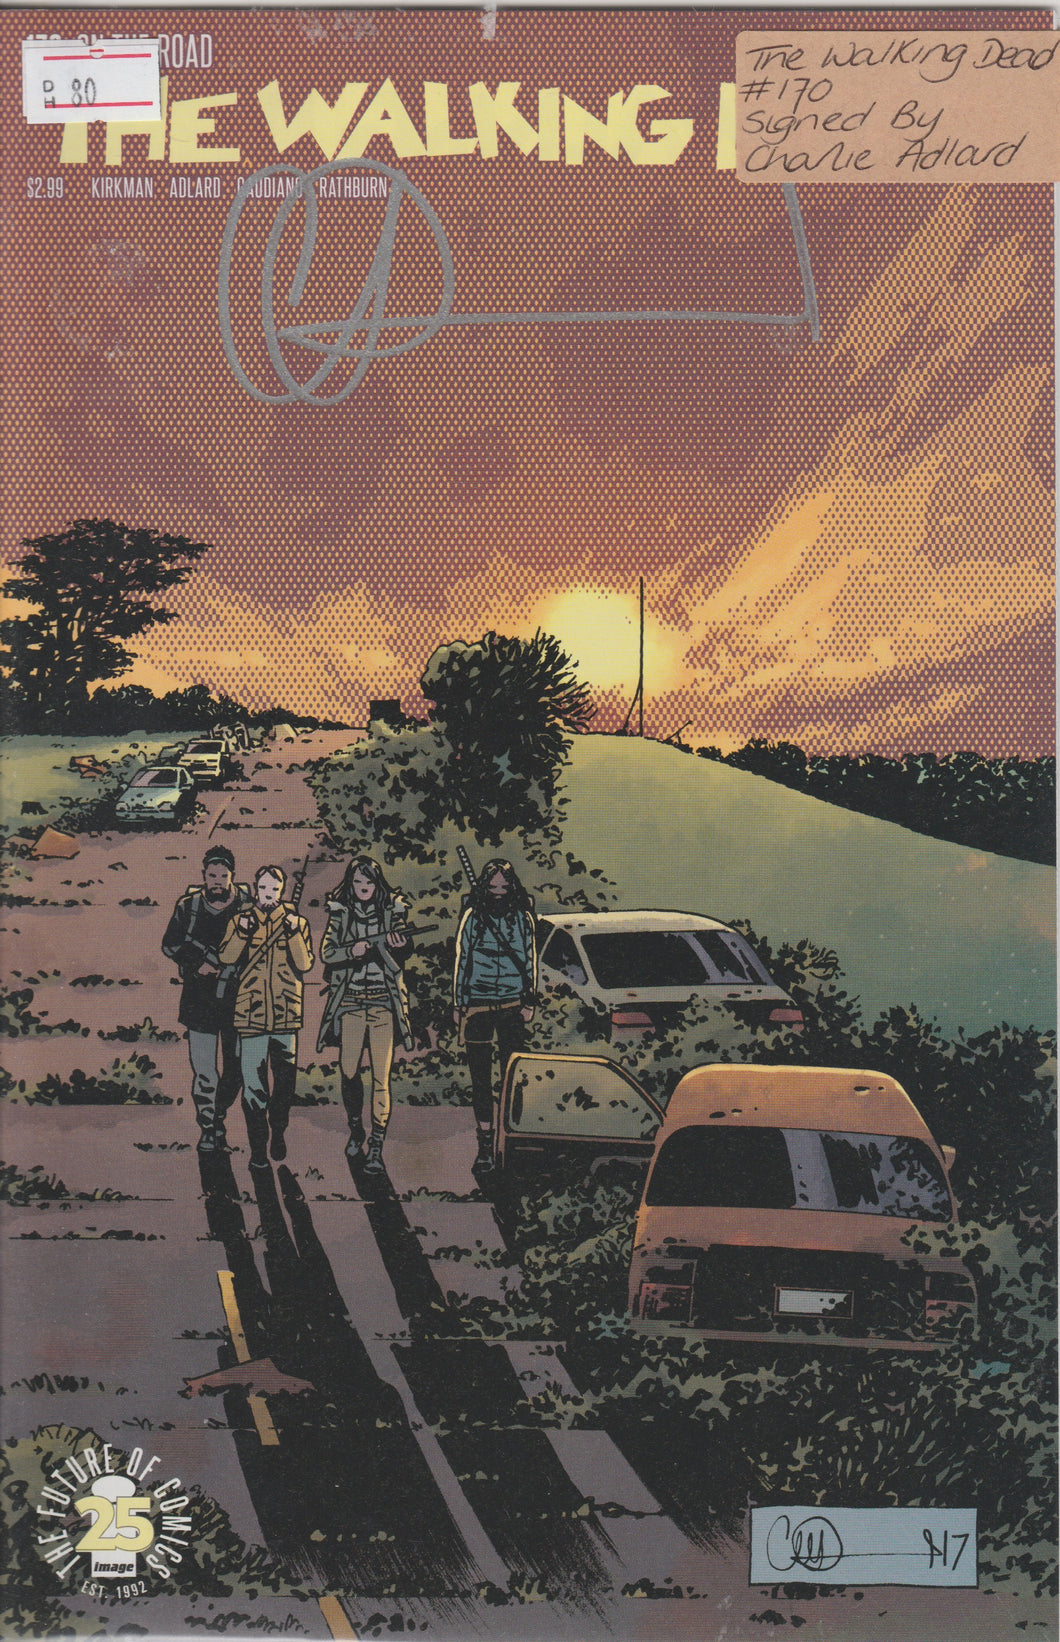 The Walking Dead 170 signed by Charlie Adlard